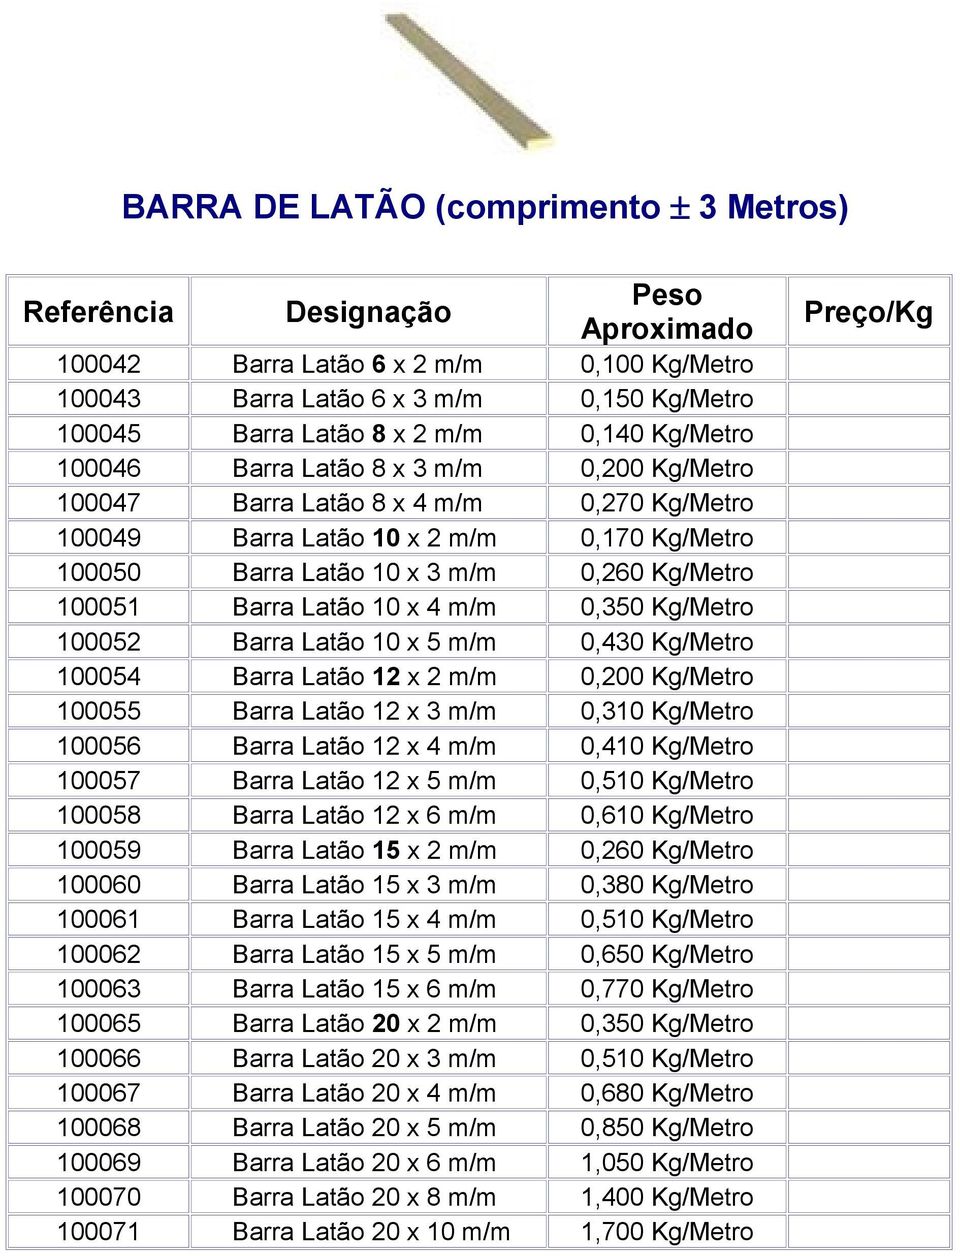 100052 Barra Latão 10 x 5 m/m 0,430 Kg/Metro 100054 Barra Latão 12 x 2 m/m 0,200 Kg/Metro 100055 Barra Latão 12 x 3 m/m 0,310 Kg/Metro 100056 Barra Latão 12 x 4 m/m 0,410 Kg/Metro 100057 Barra Latão